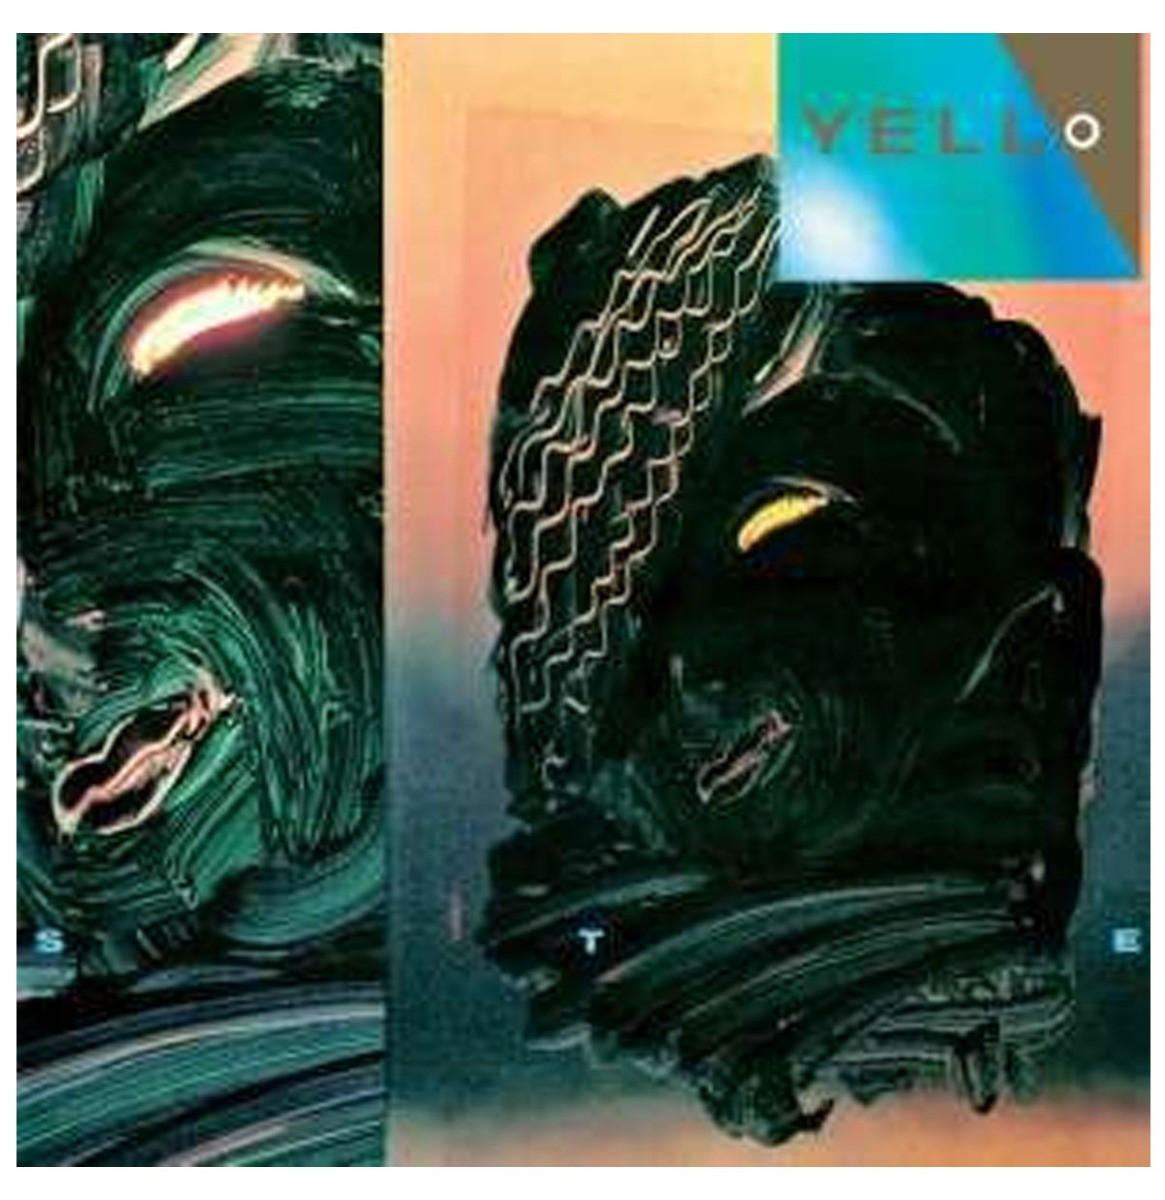 Yello - Stella LP